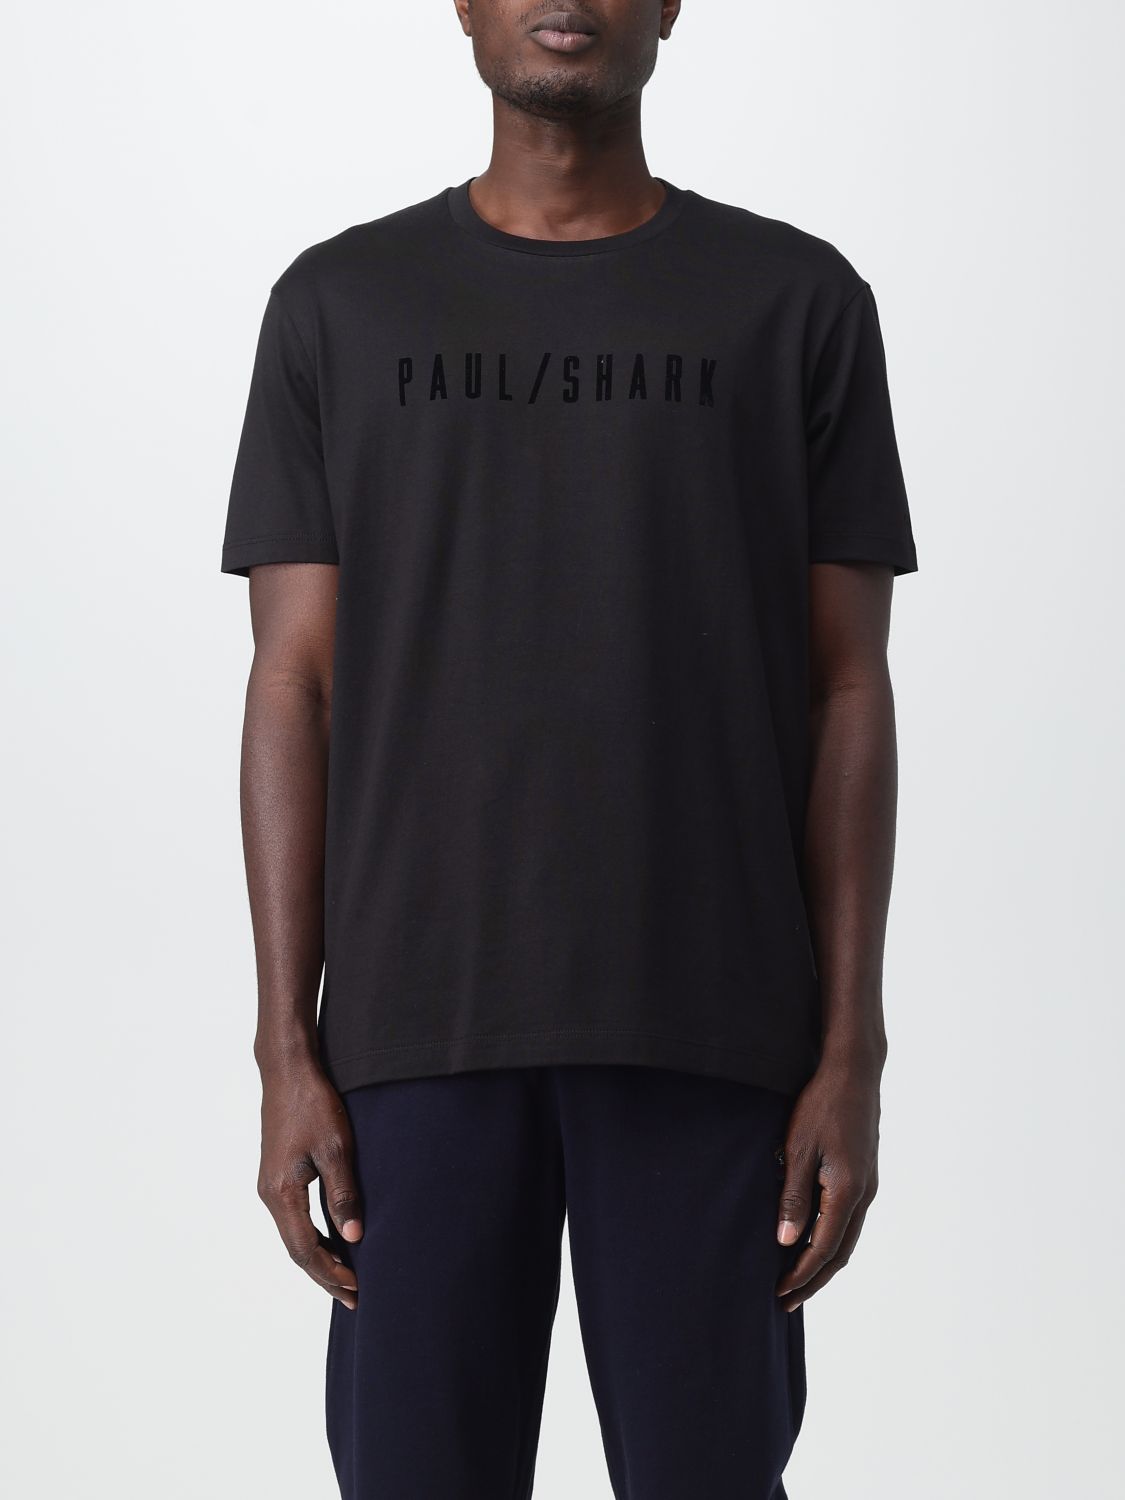 Paul & Shark T-shirt  Men Color Black